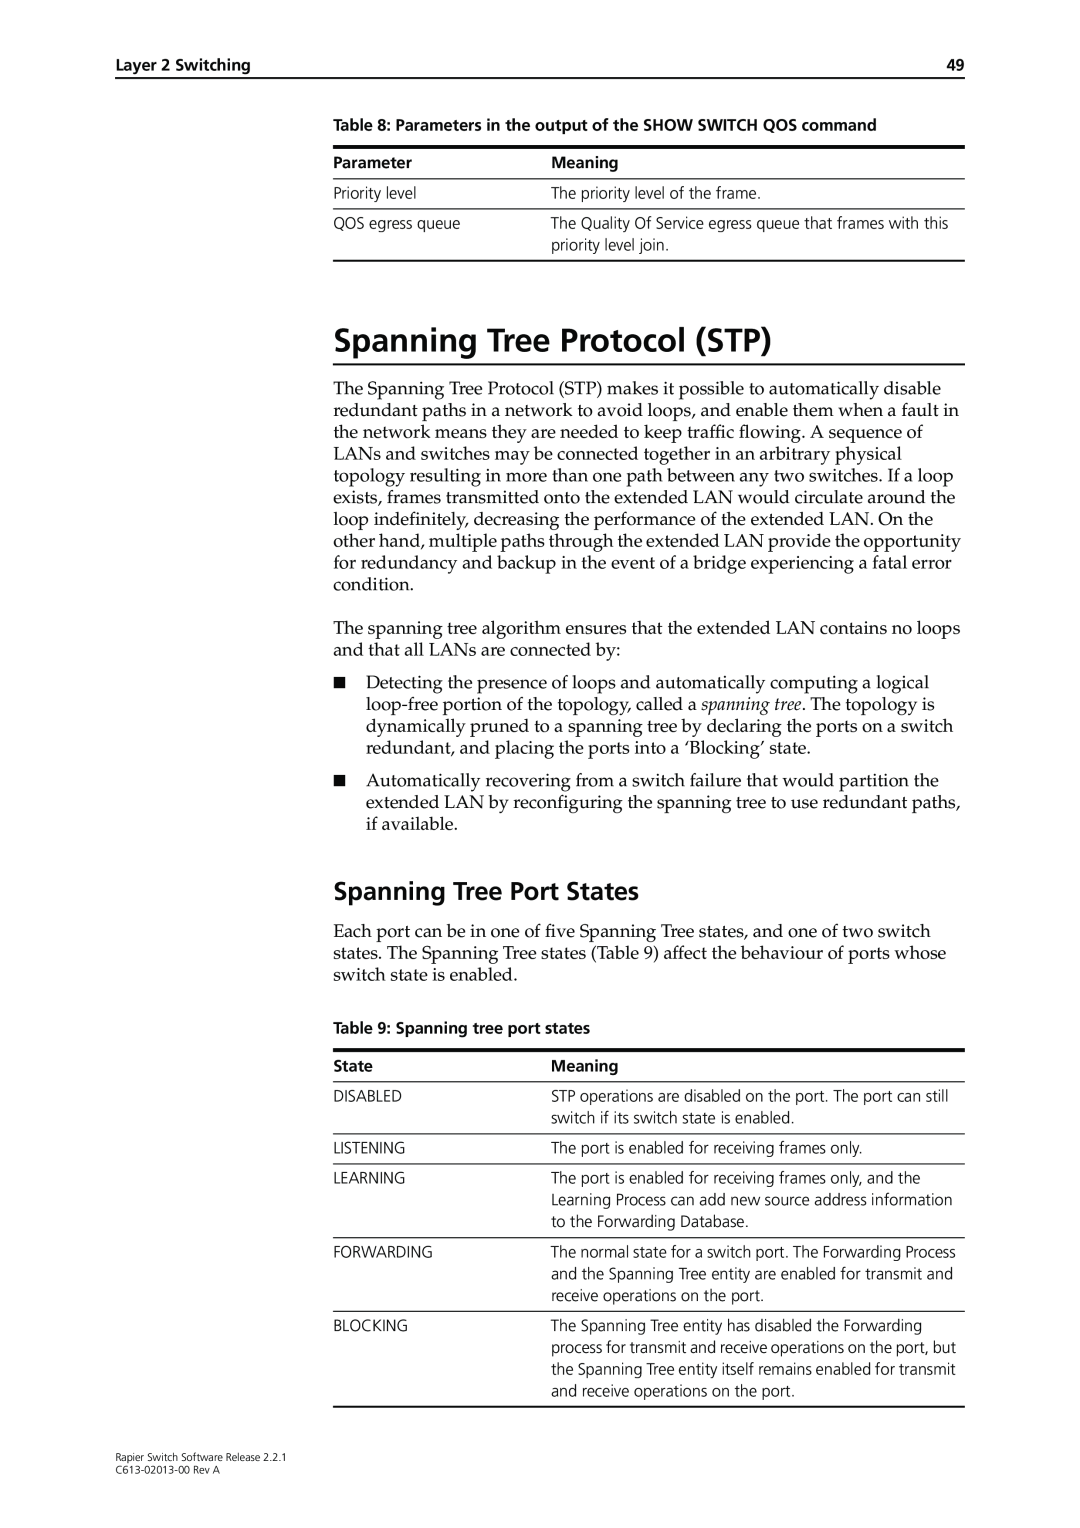 Allied Telesis C613-02013-00 manual Spanning Tree Protocol STP, Spanning Tree Port States 